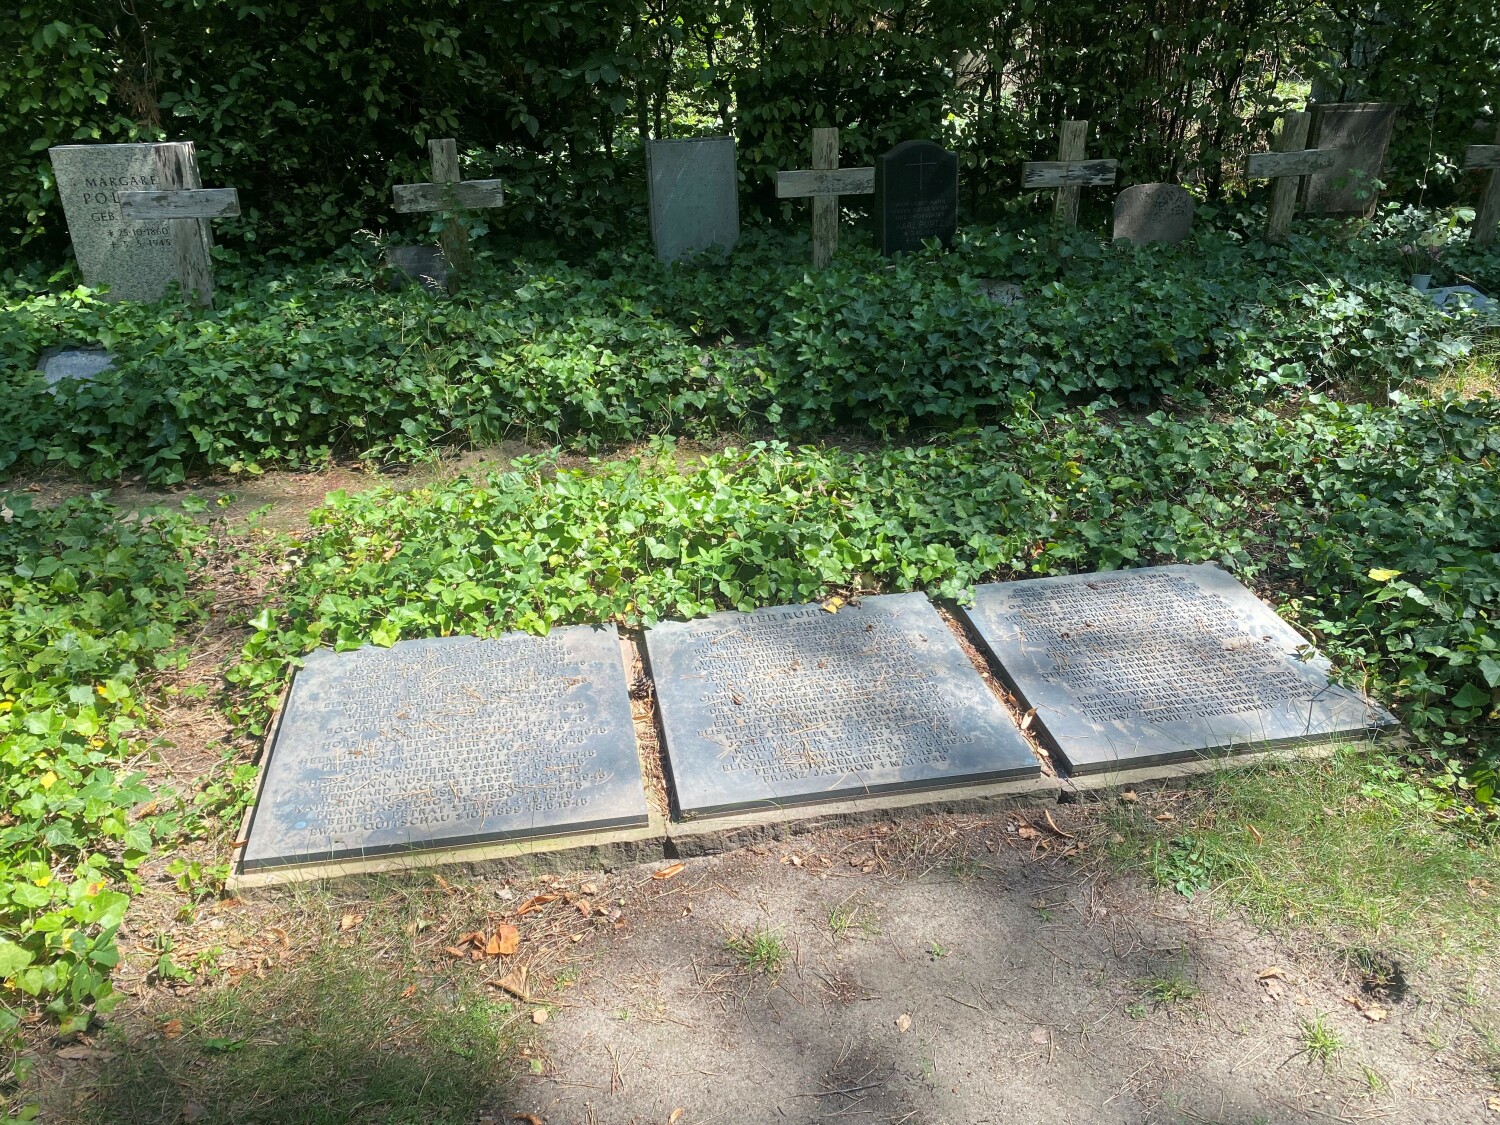 Grabplatten erinnnern an Opfer des Weltkriegs.